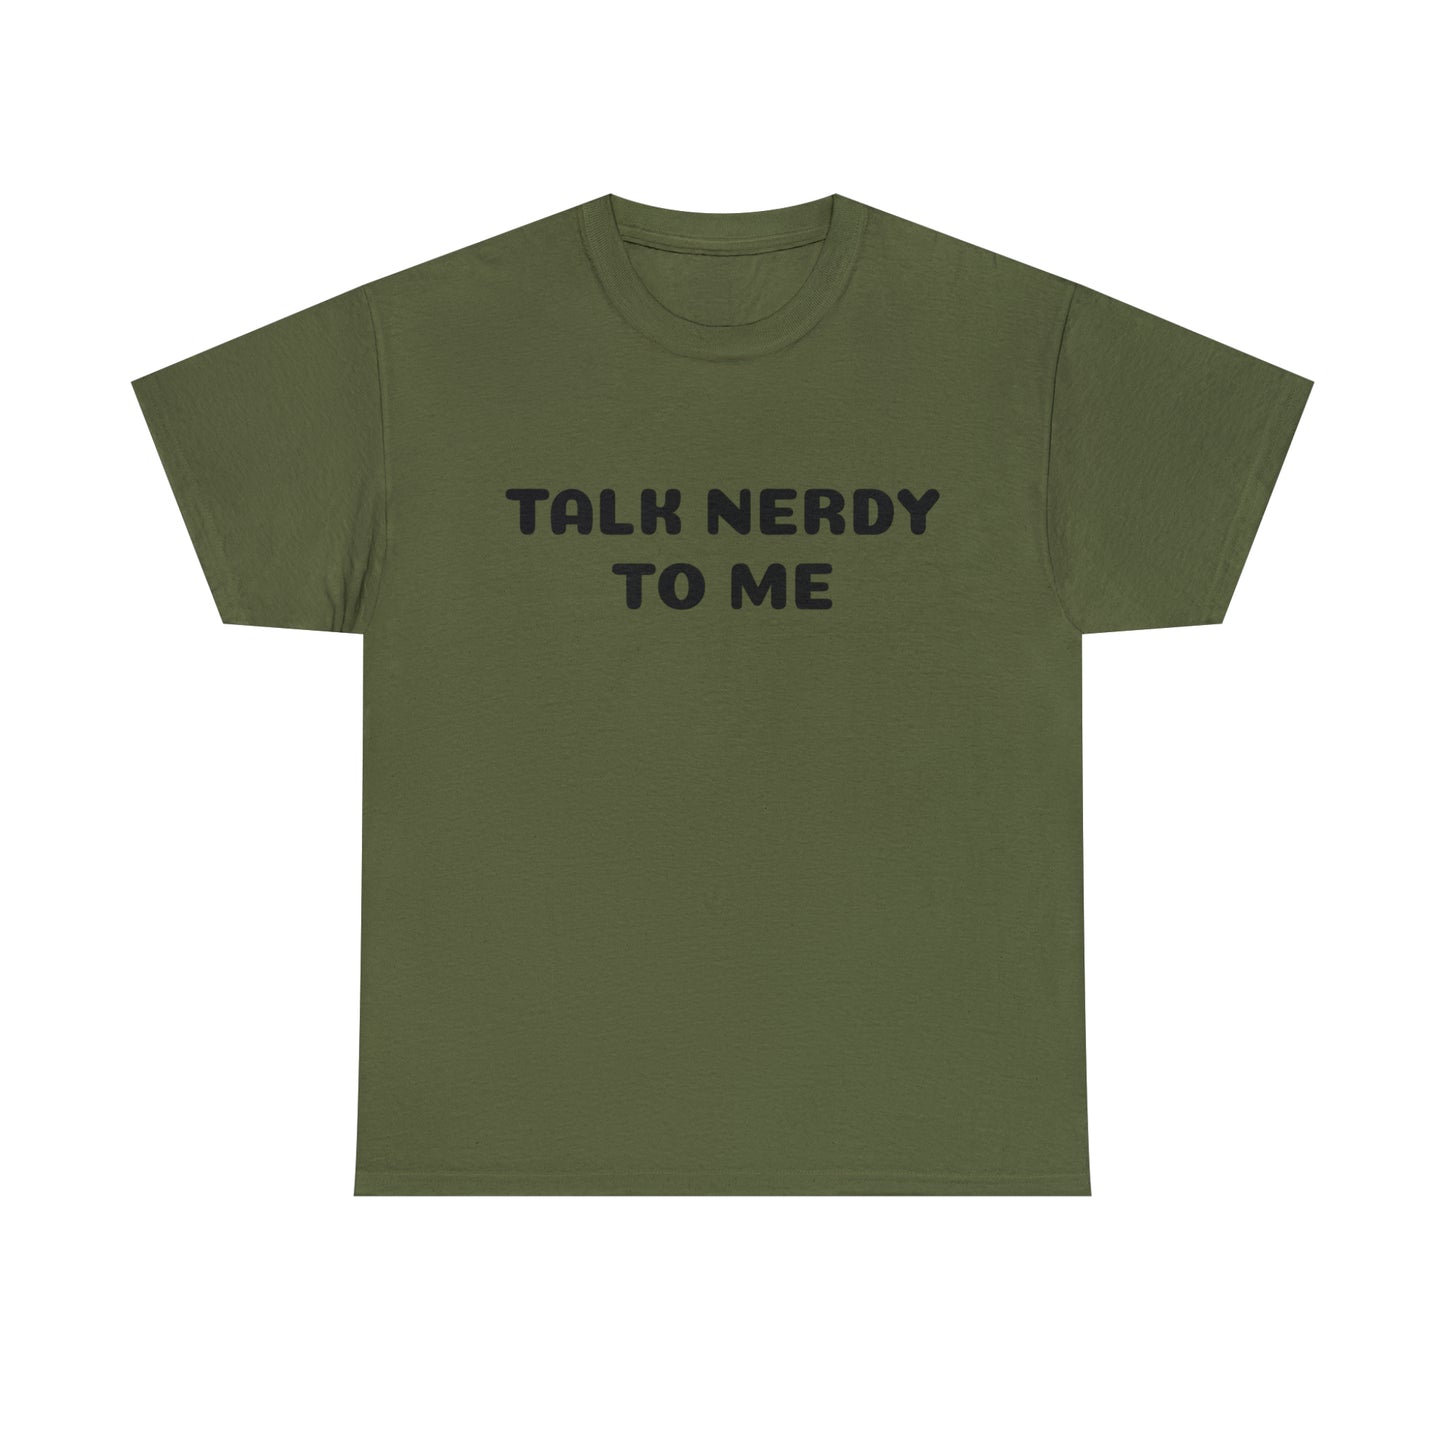 Custom Parody T-shirt, Talk nerdy to me shirt design